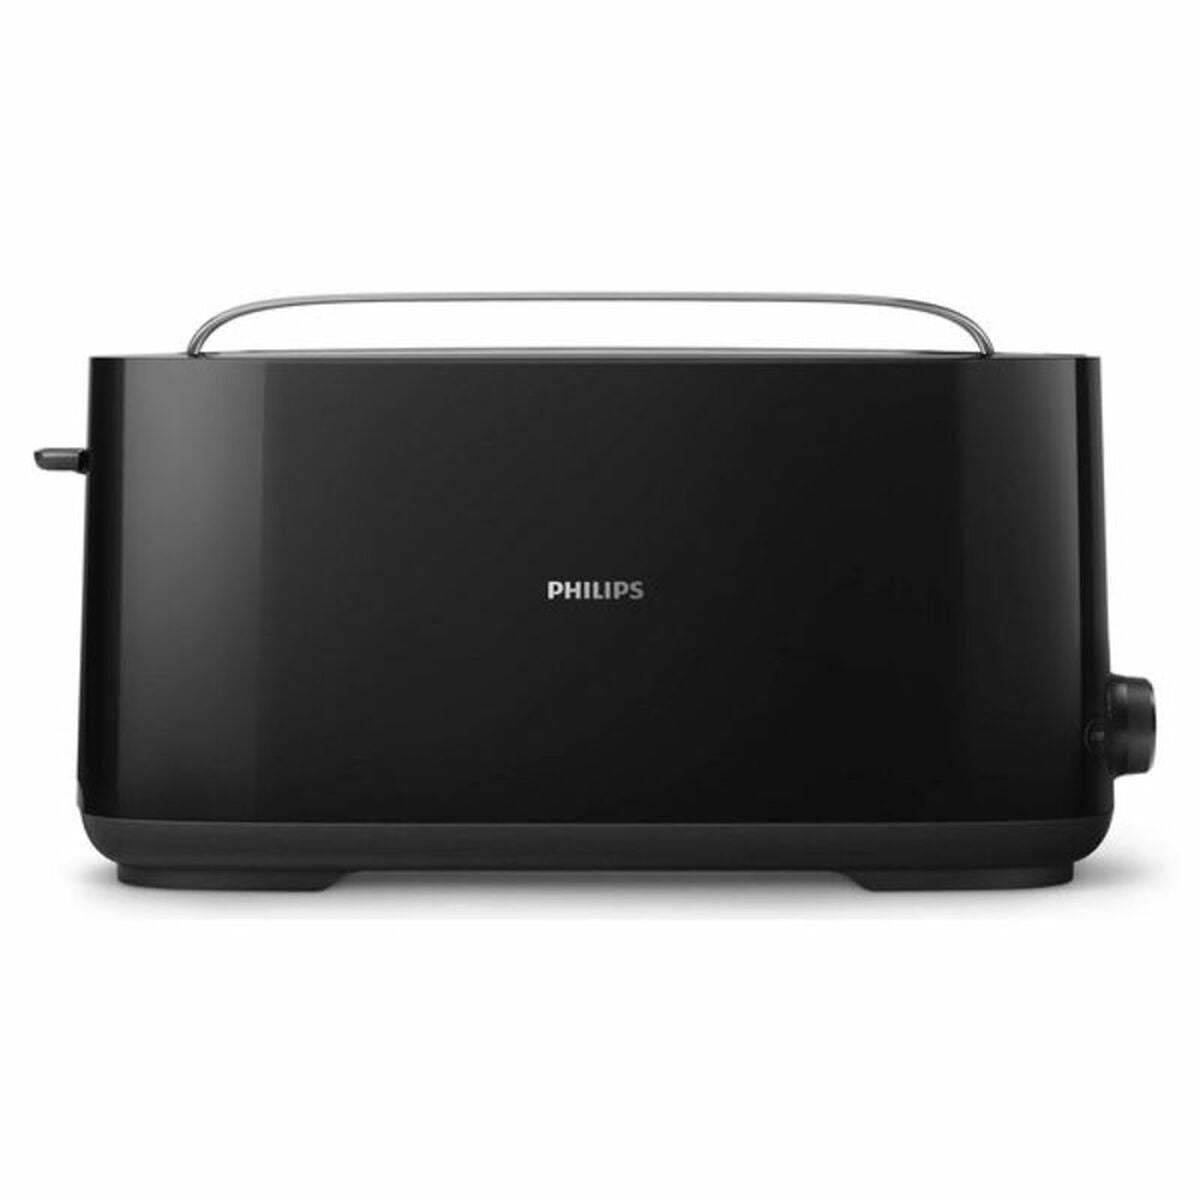 Toaster Philips Tostadora HD2590 / 90 950 W